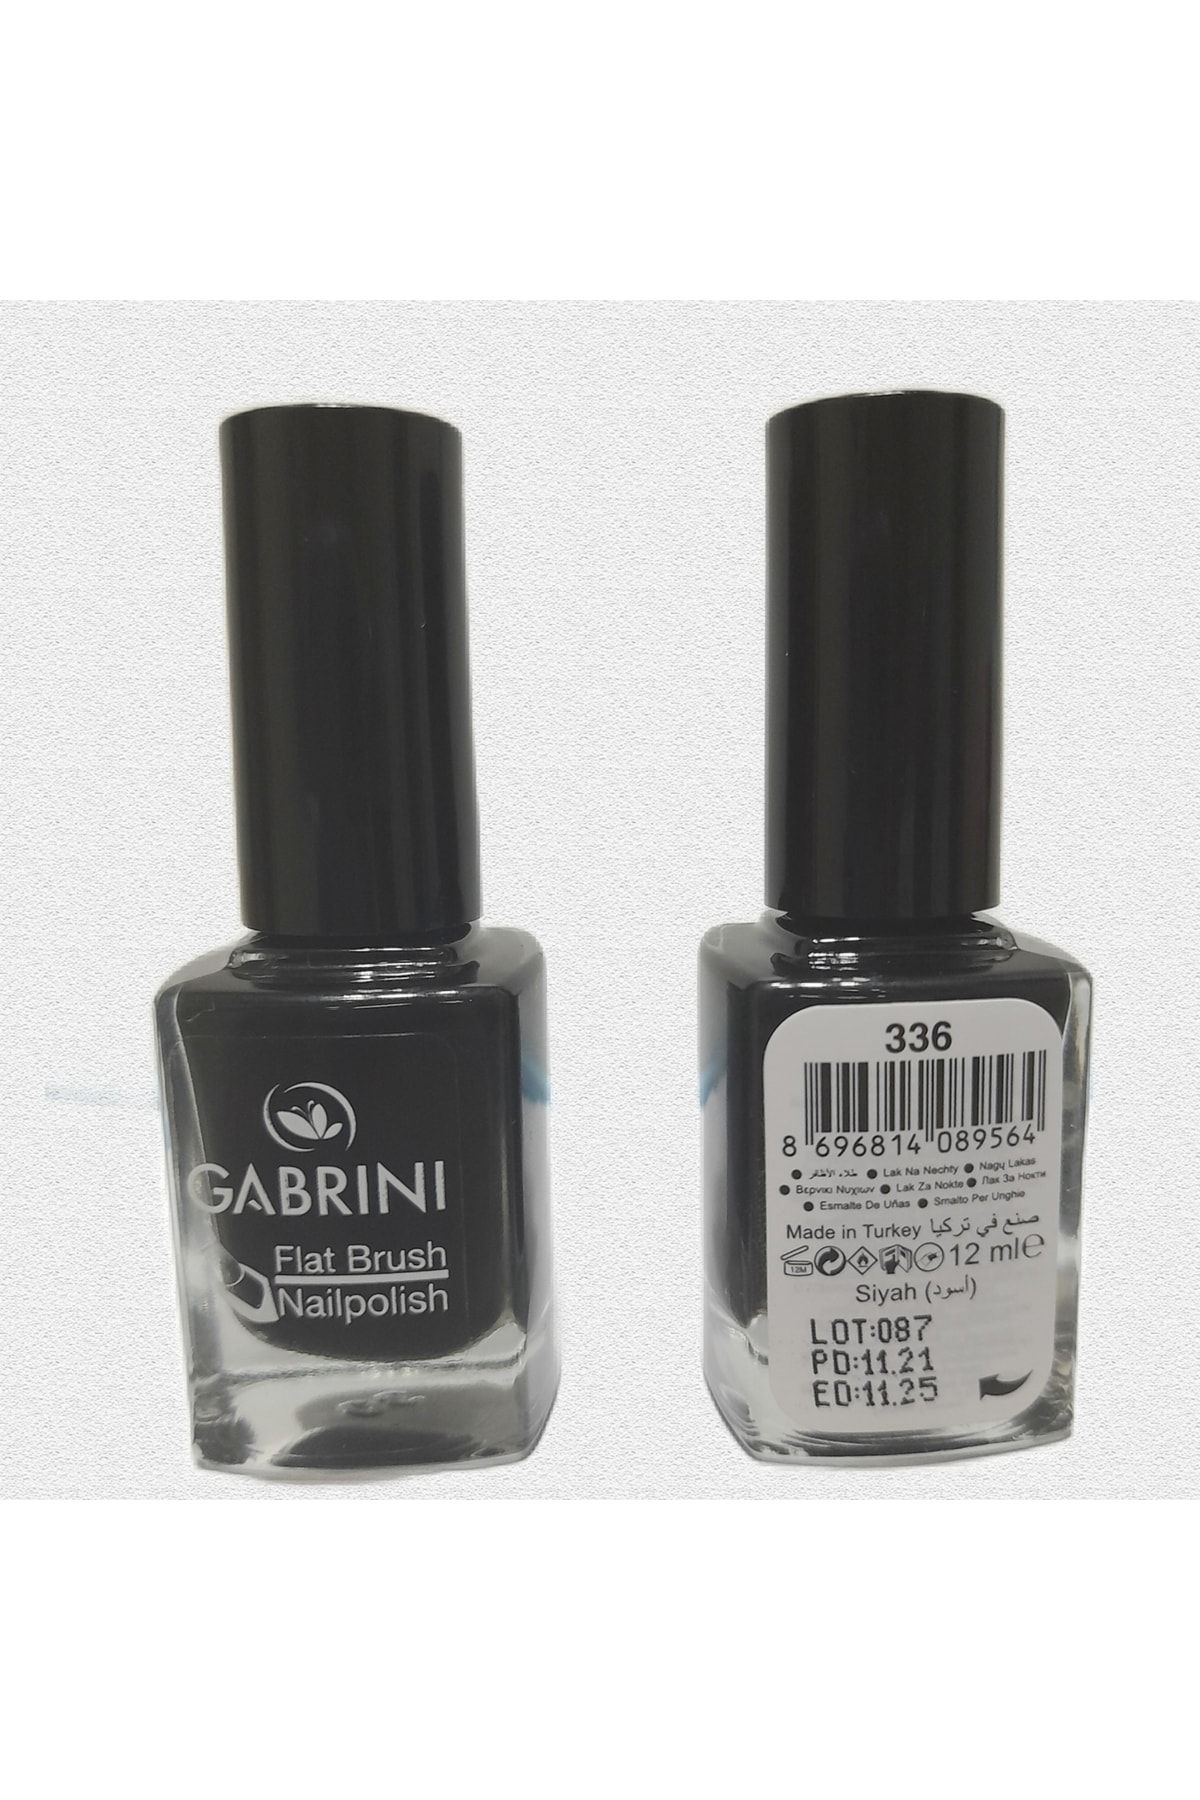 Gabrini Flat Brush Oje Siyah No: 336